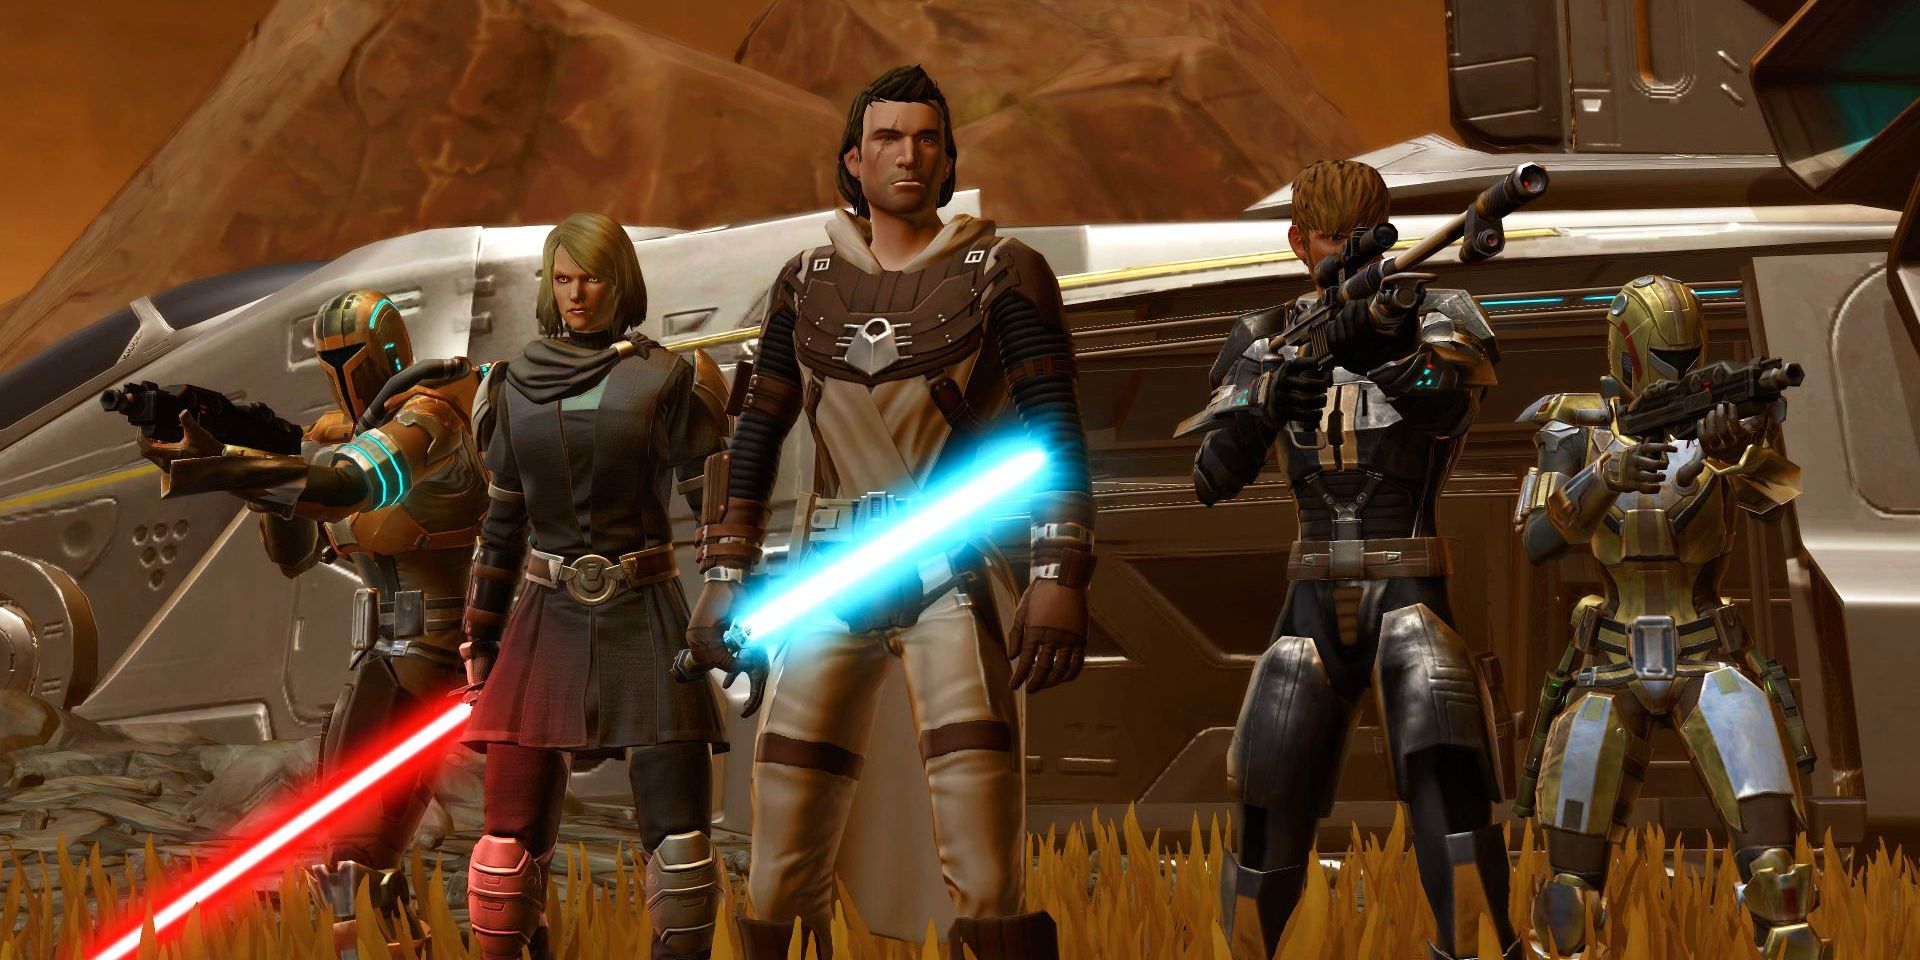 BioWare isn't ending Star Wars: The Old Republic soon